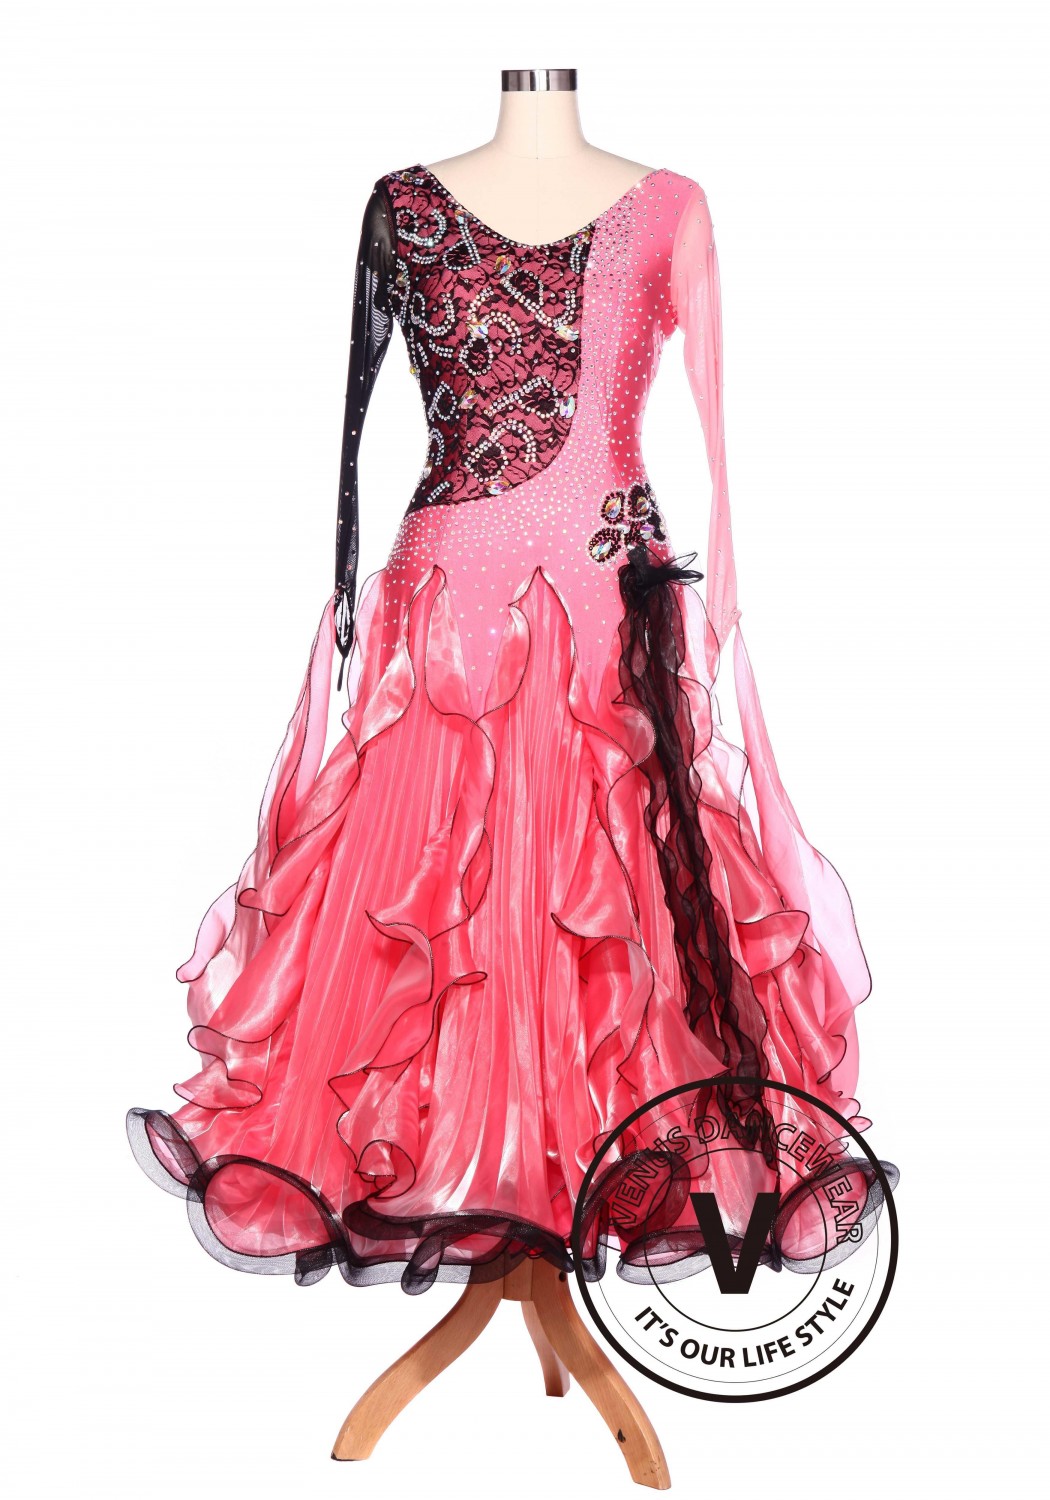 Black Lace Pink Waltz Standard Tango Smooth Ballroom Competition Dance Dress